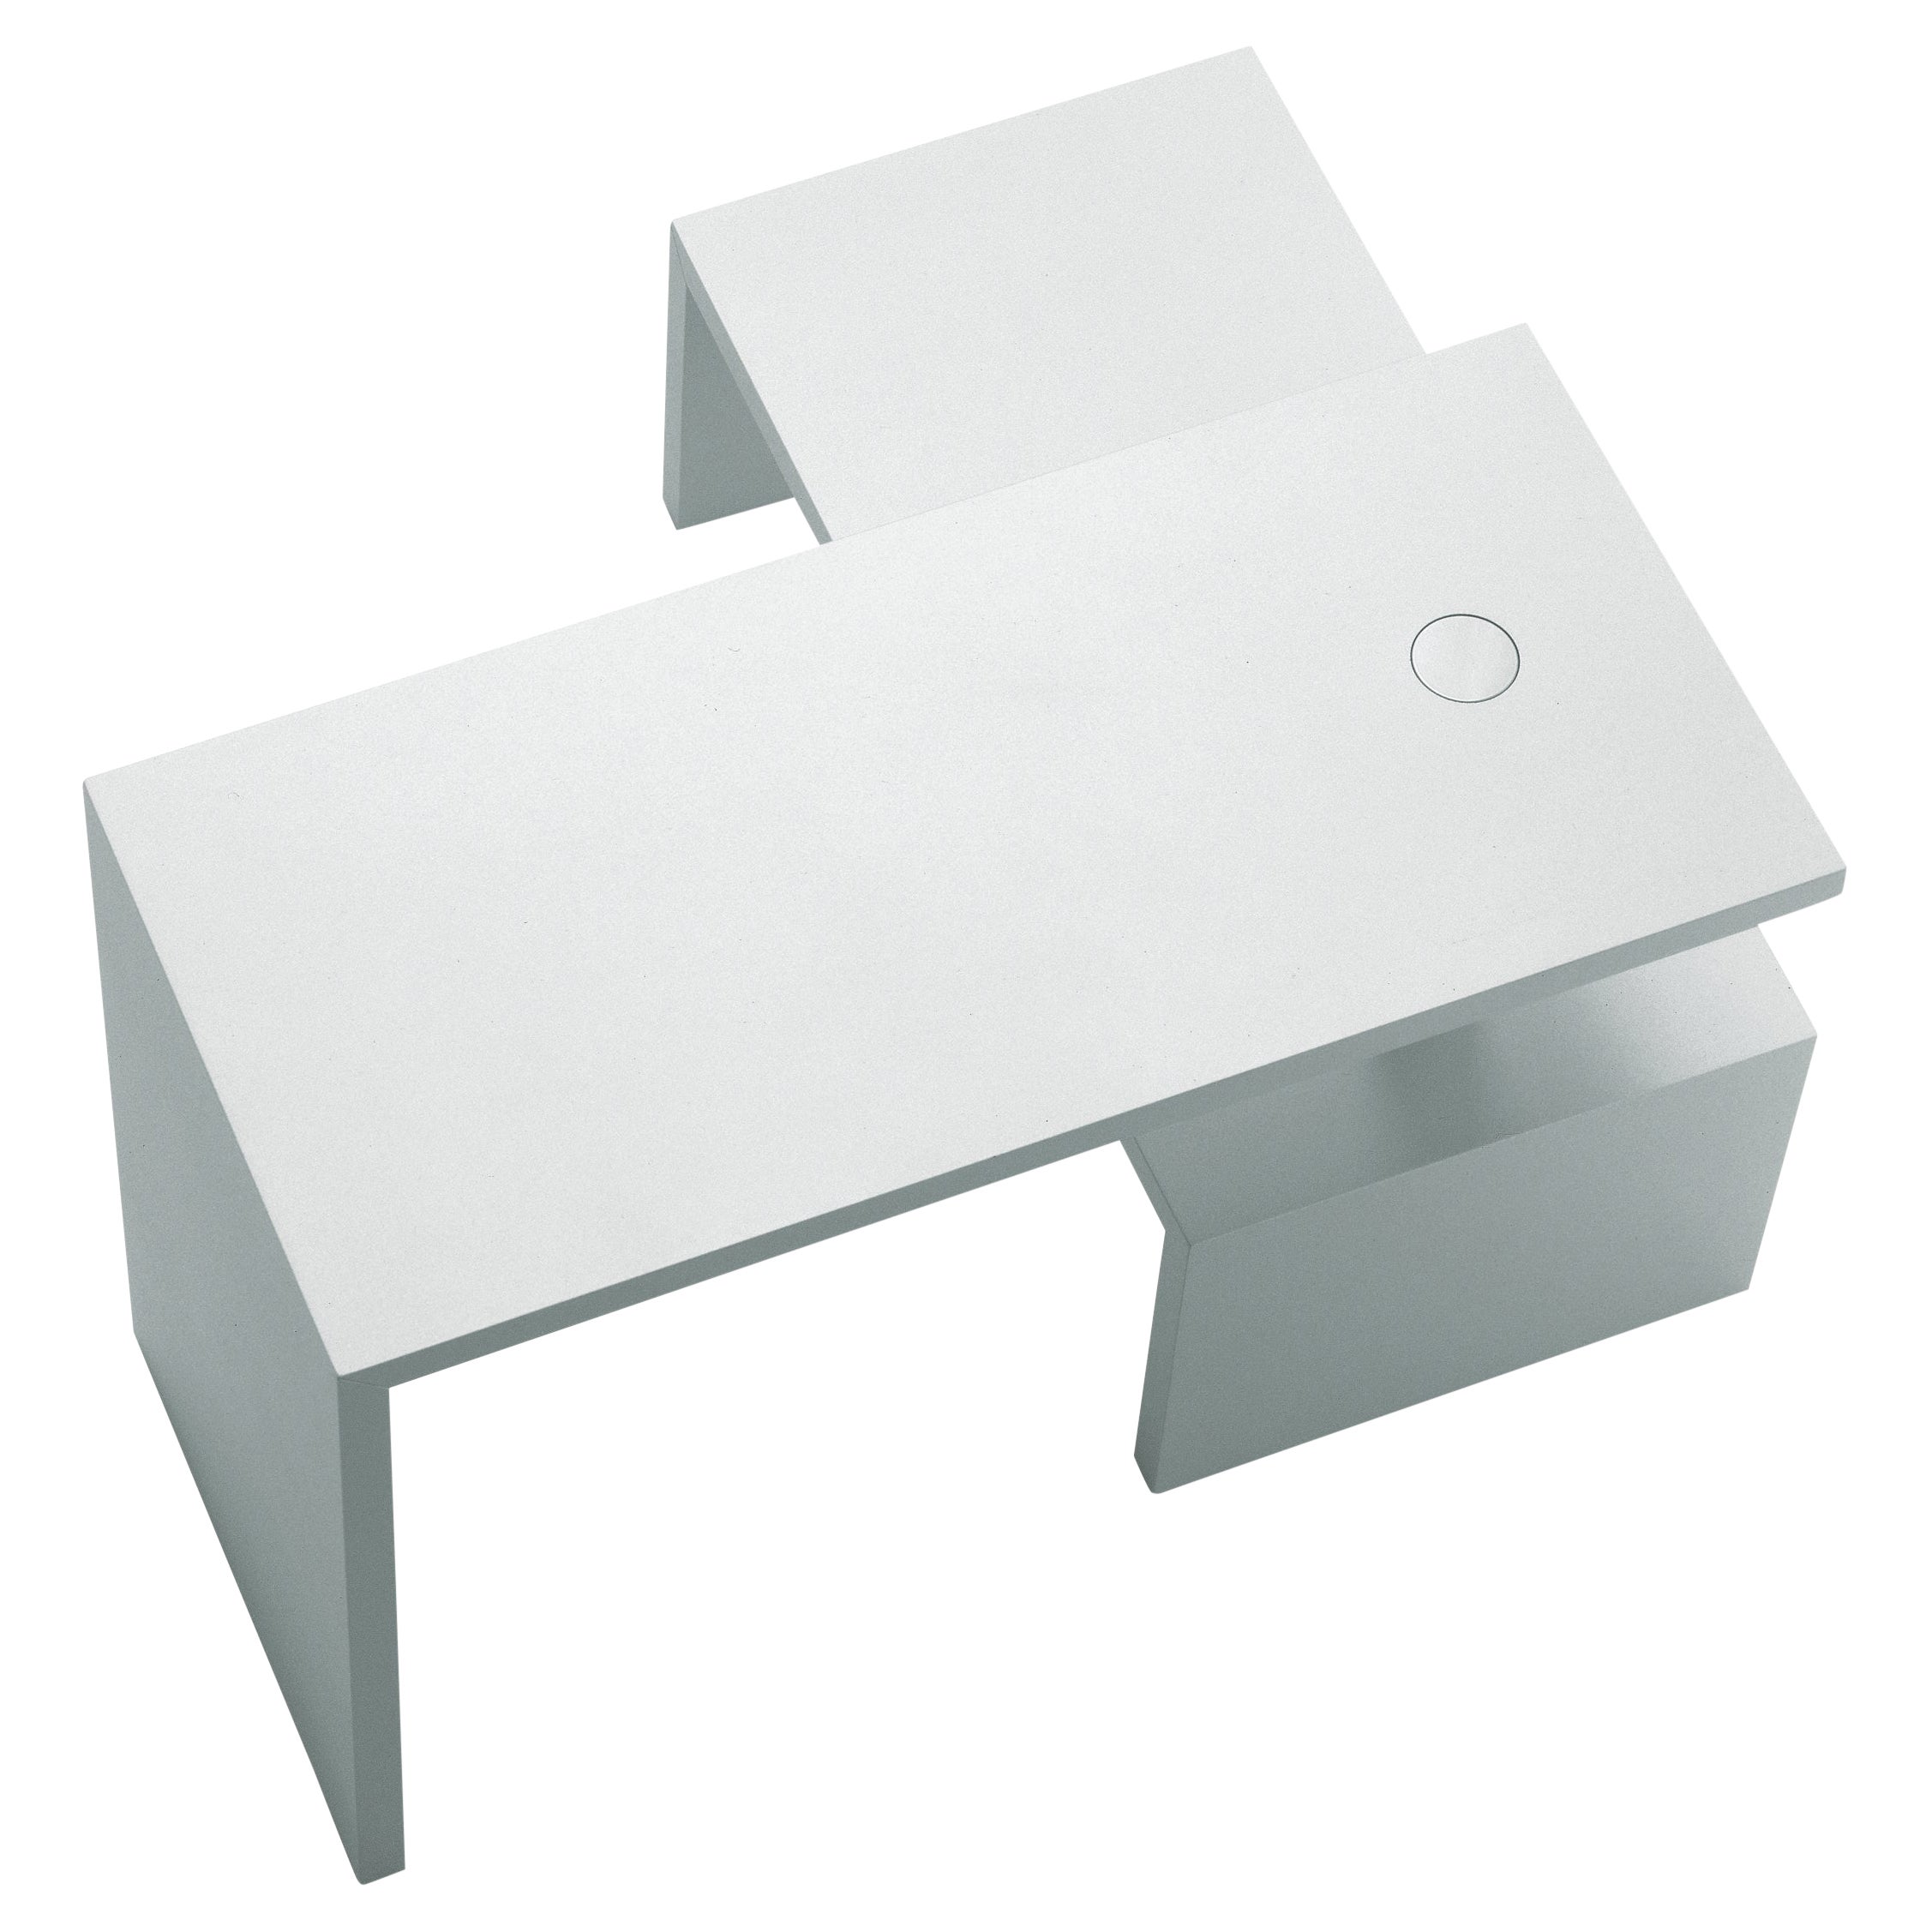 Zanotta Basello Rotating Shelves Small Table in White Finish